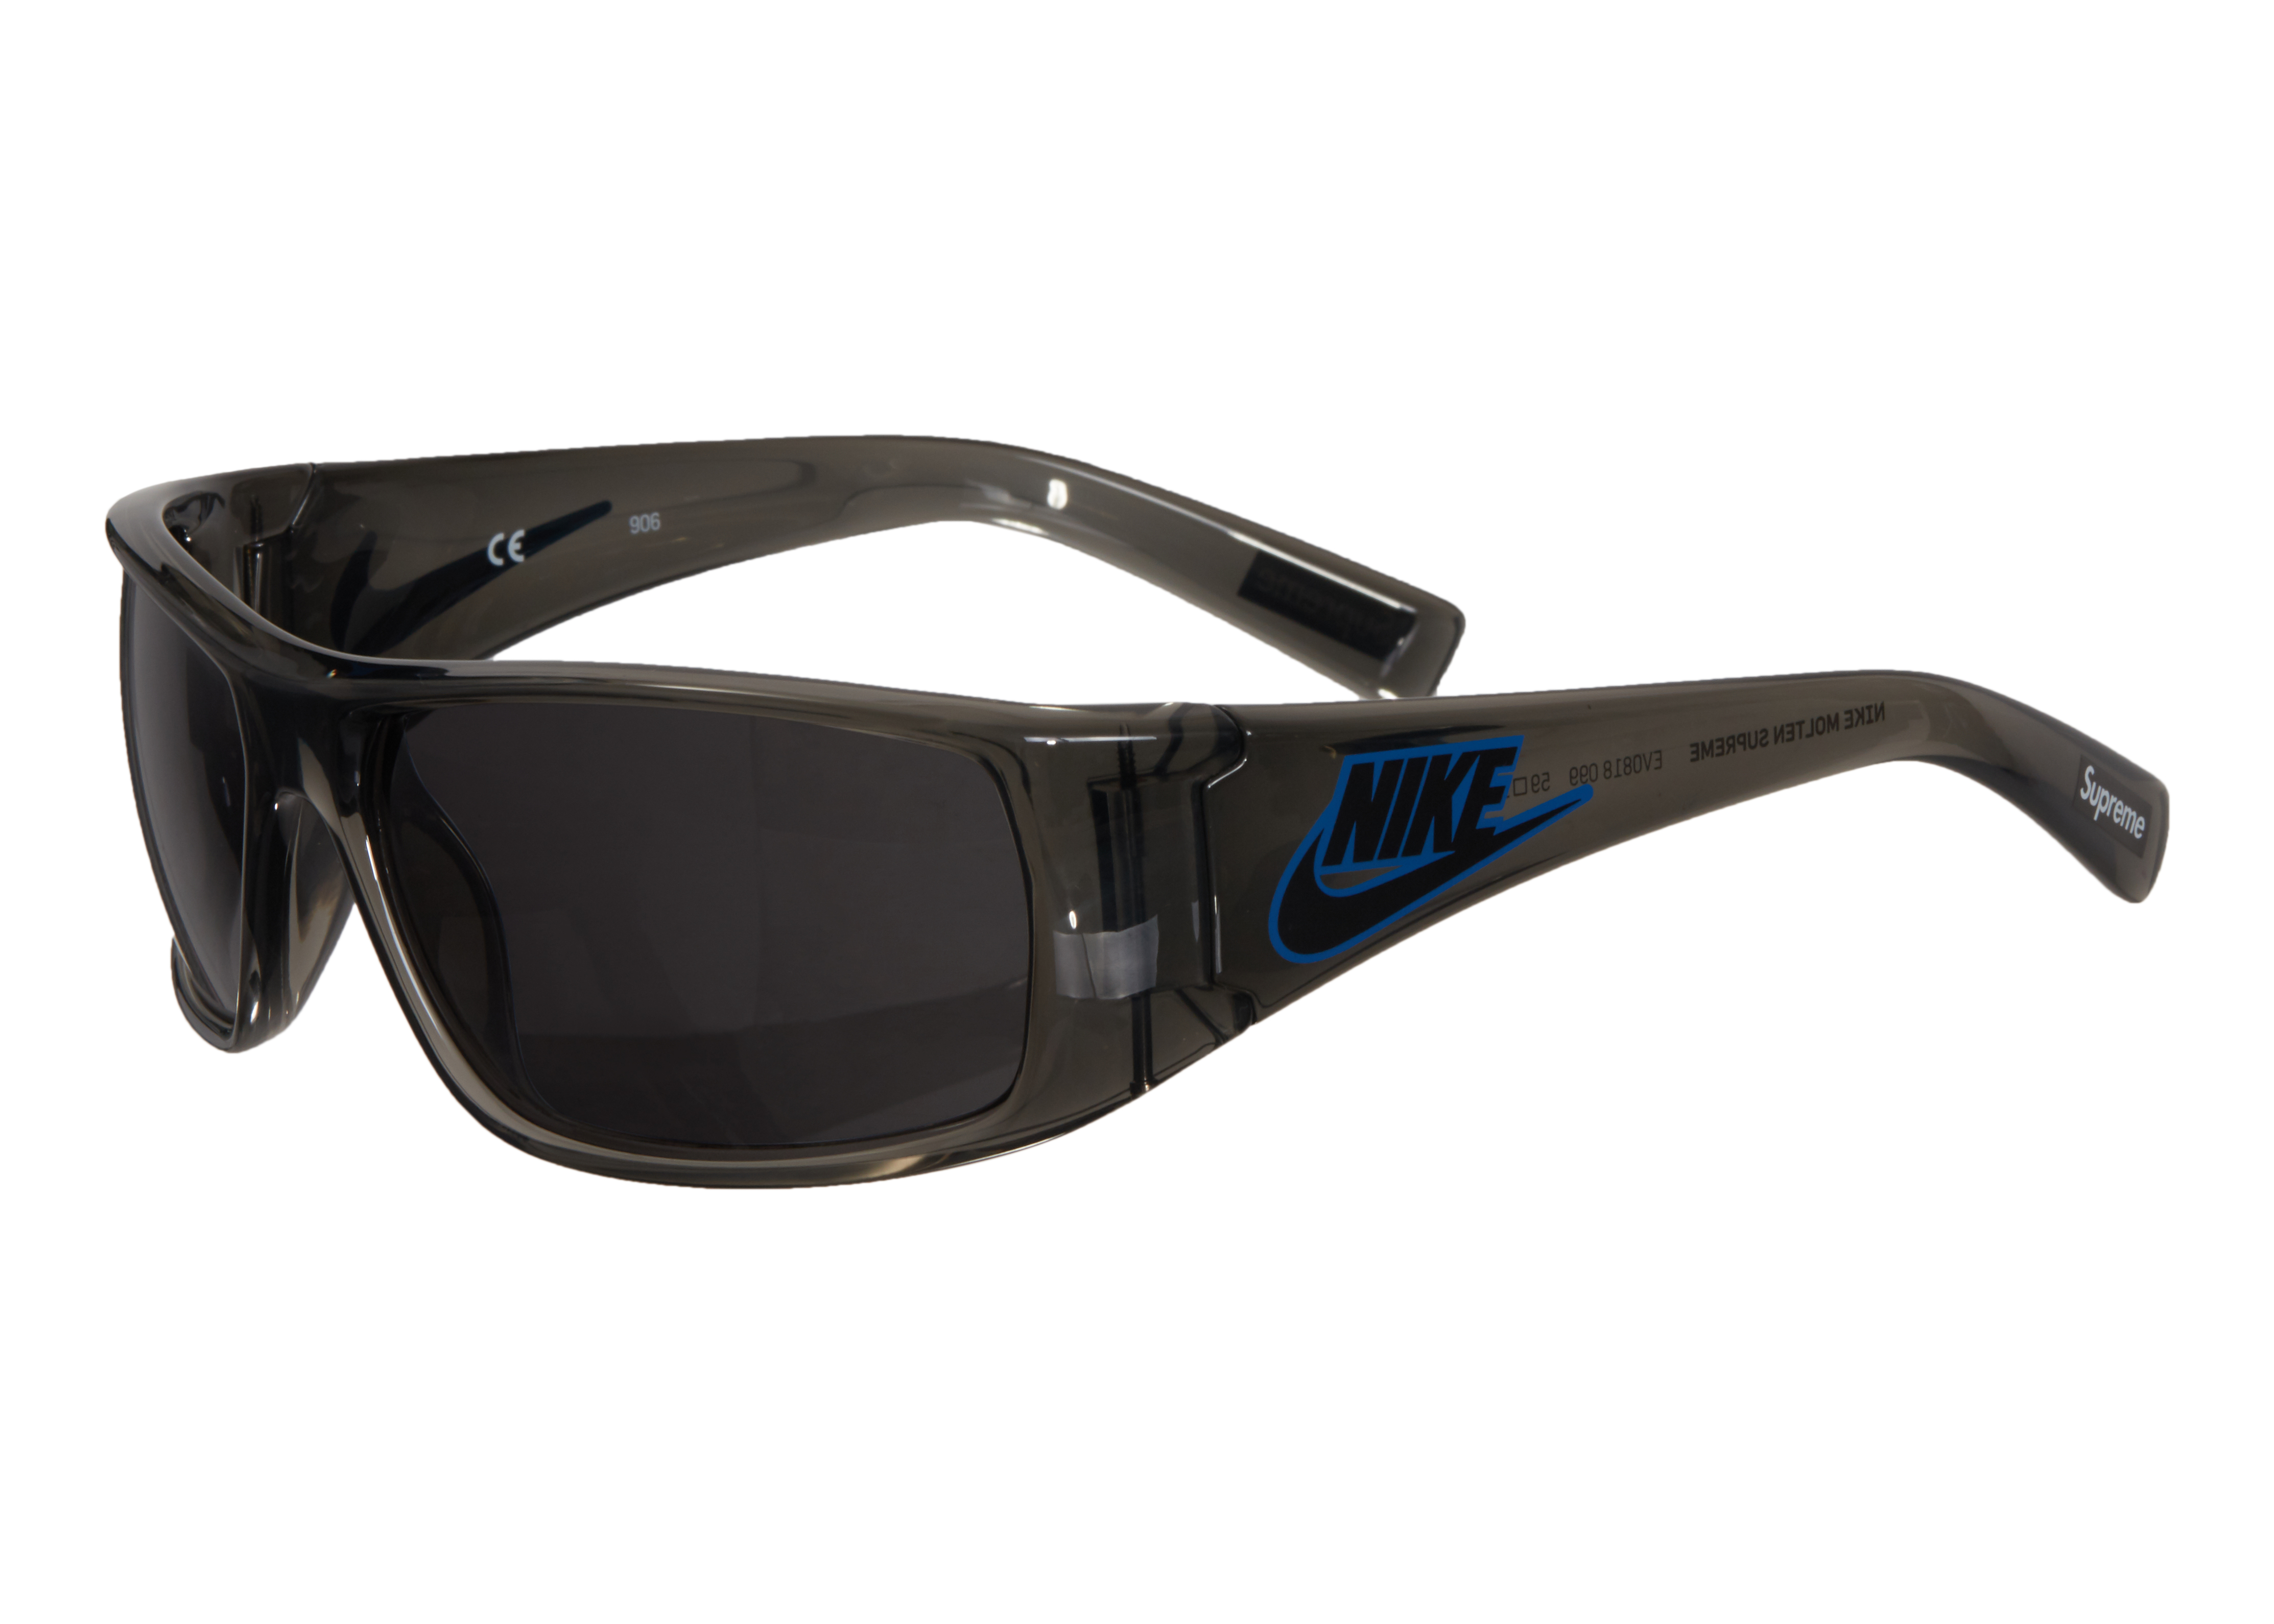 Supreme x Nike Sunglasses Glossy Black - Novelship